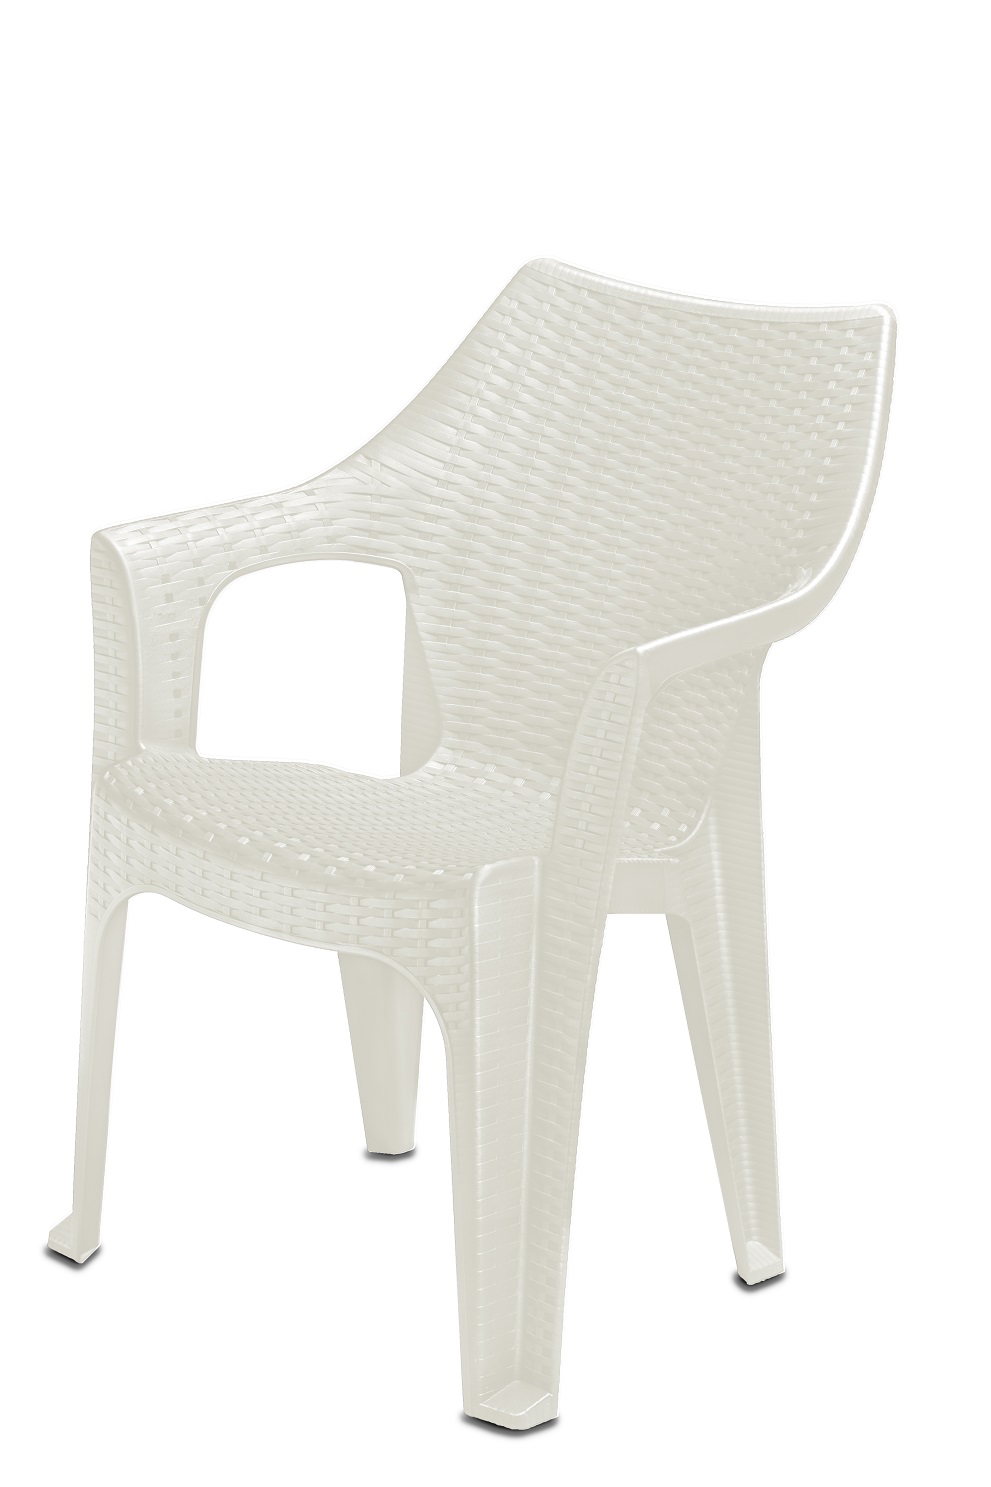 Babel Chair